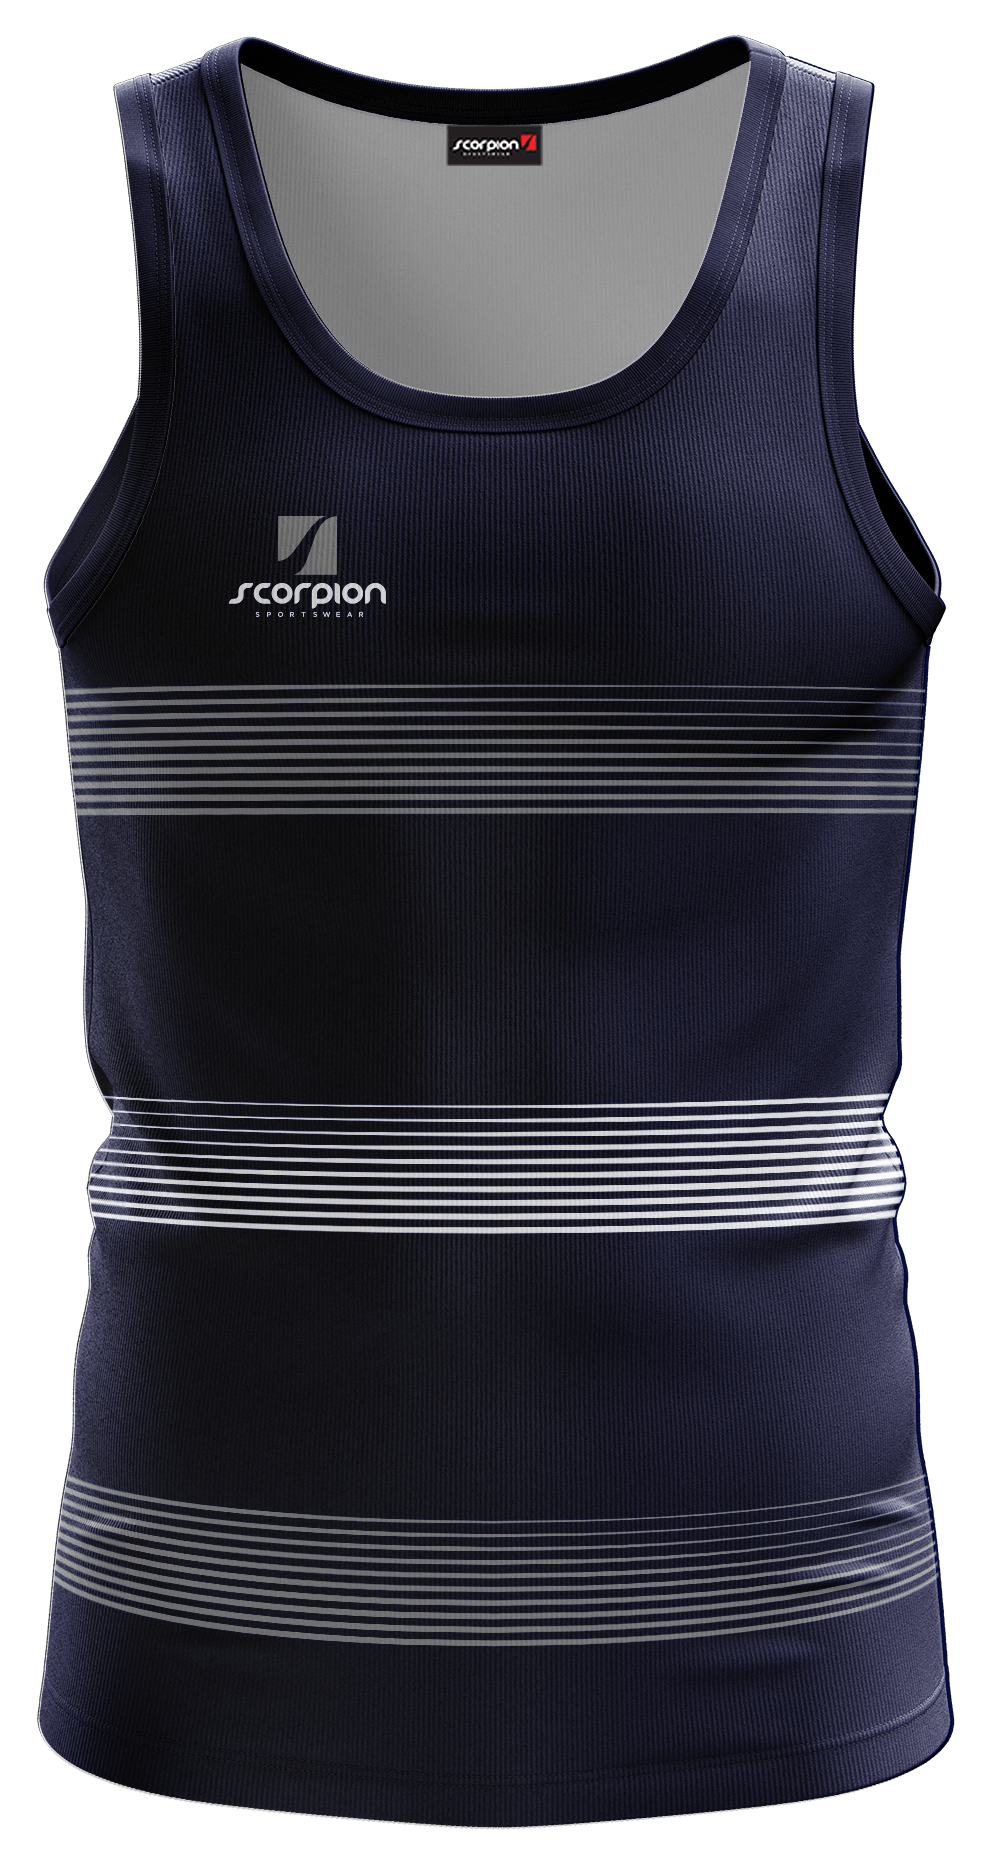 Scorpion Vests Pattern 2 - Navy/Grey/White